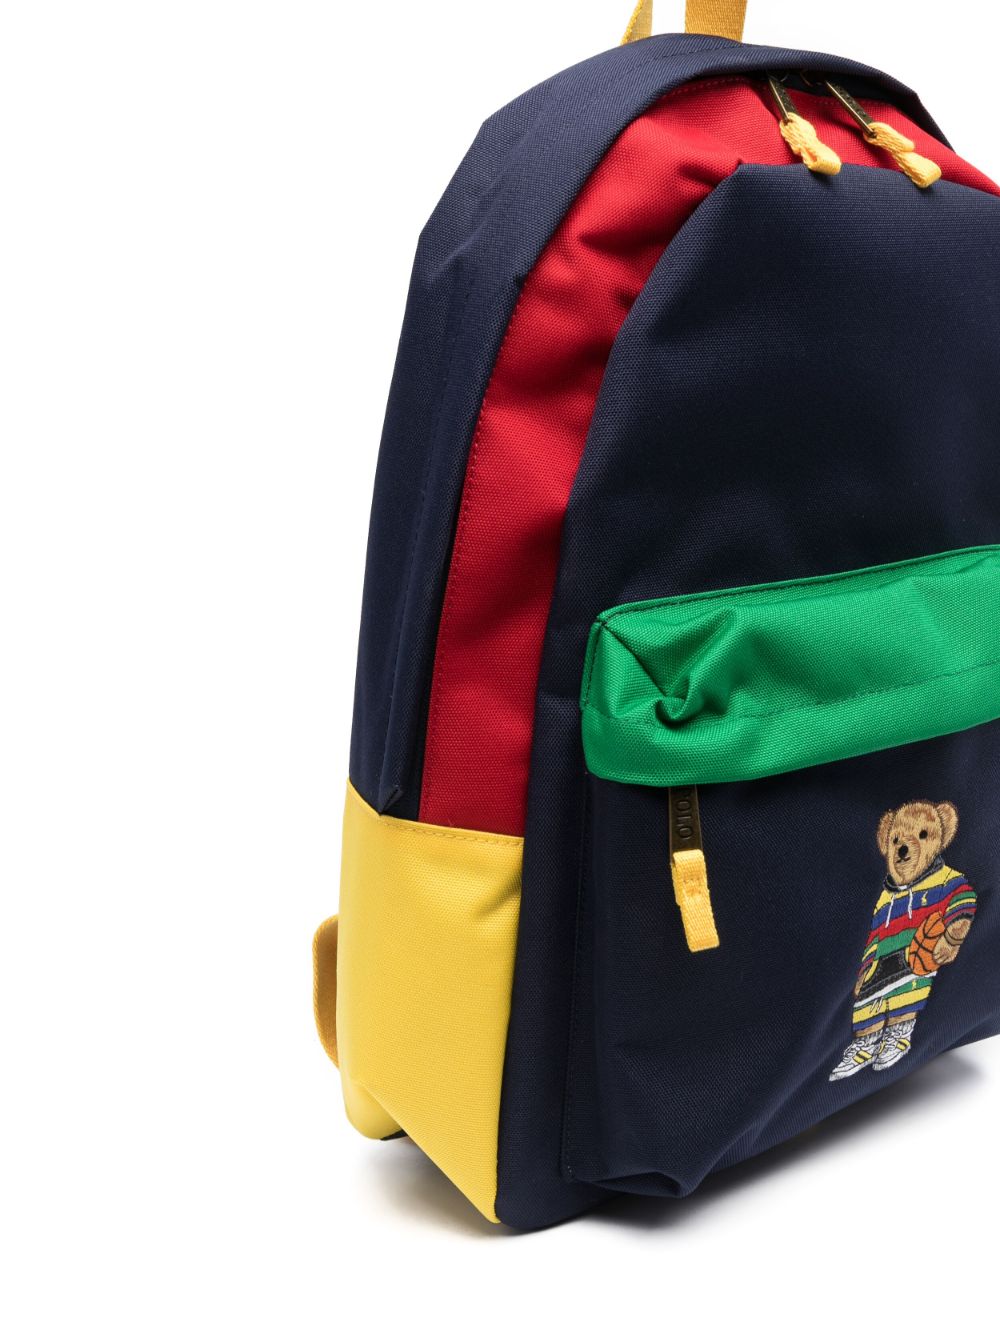 Ralph Lauren Kids Polo Bear Backpack